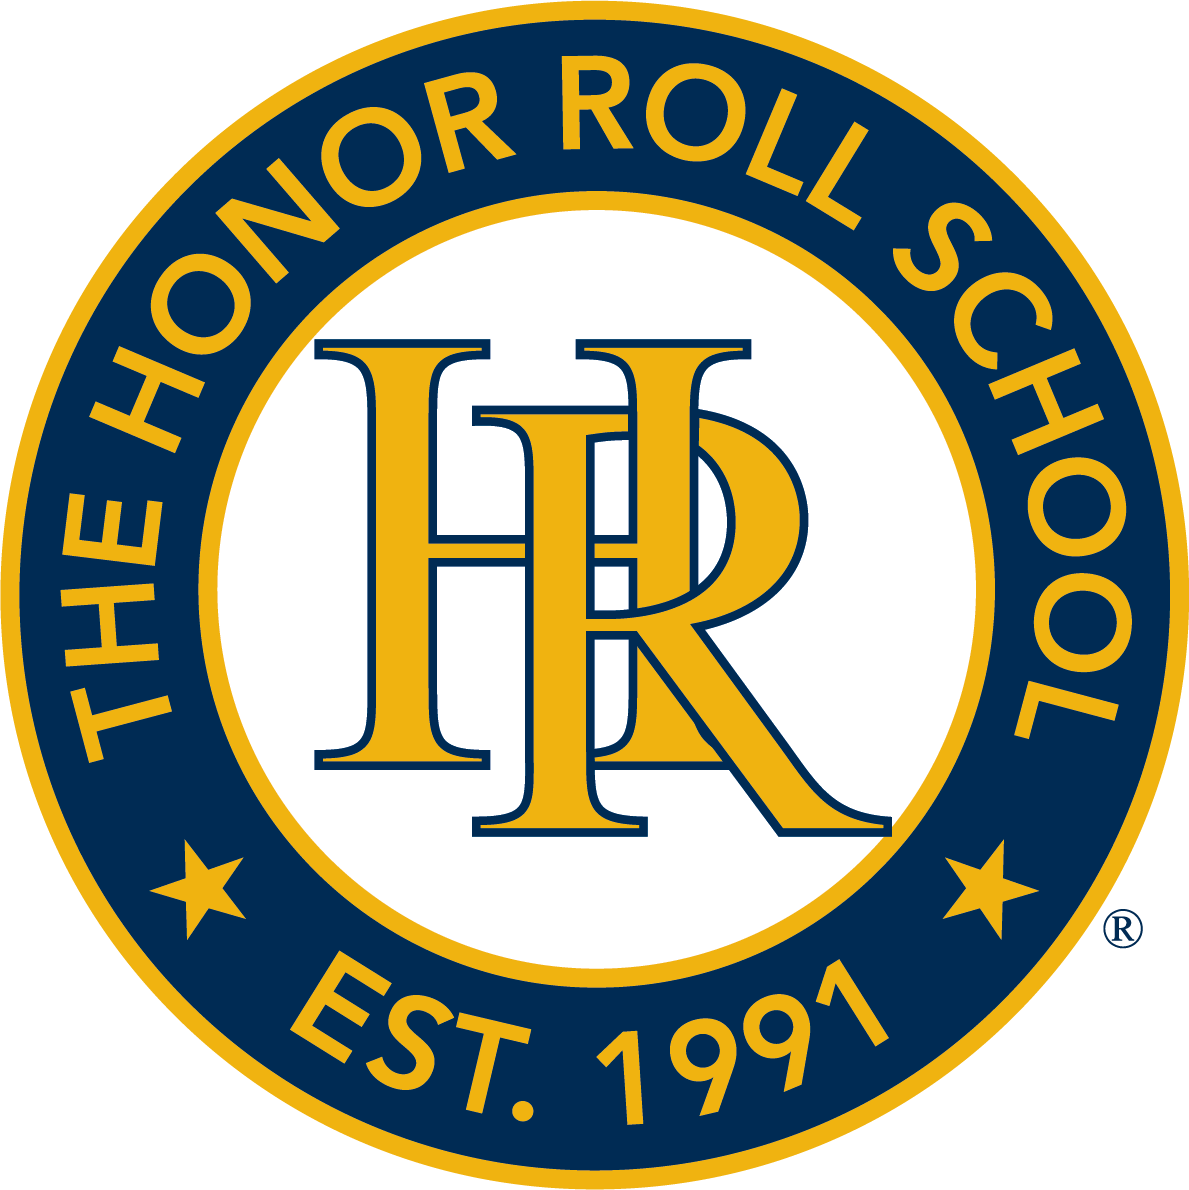 The Honor Roll School logo